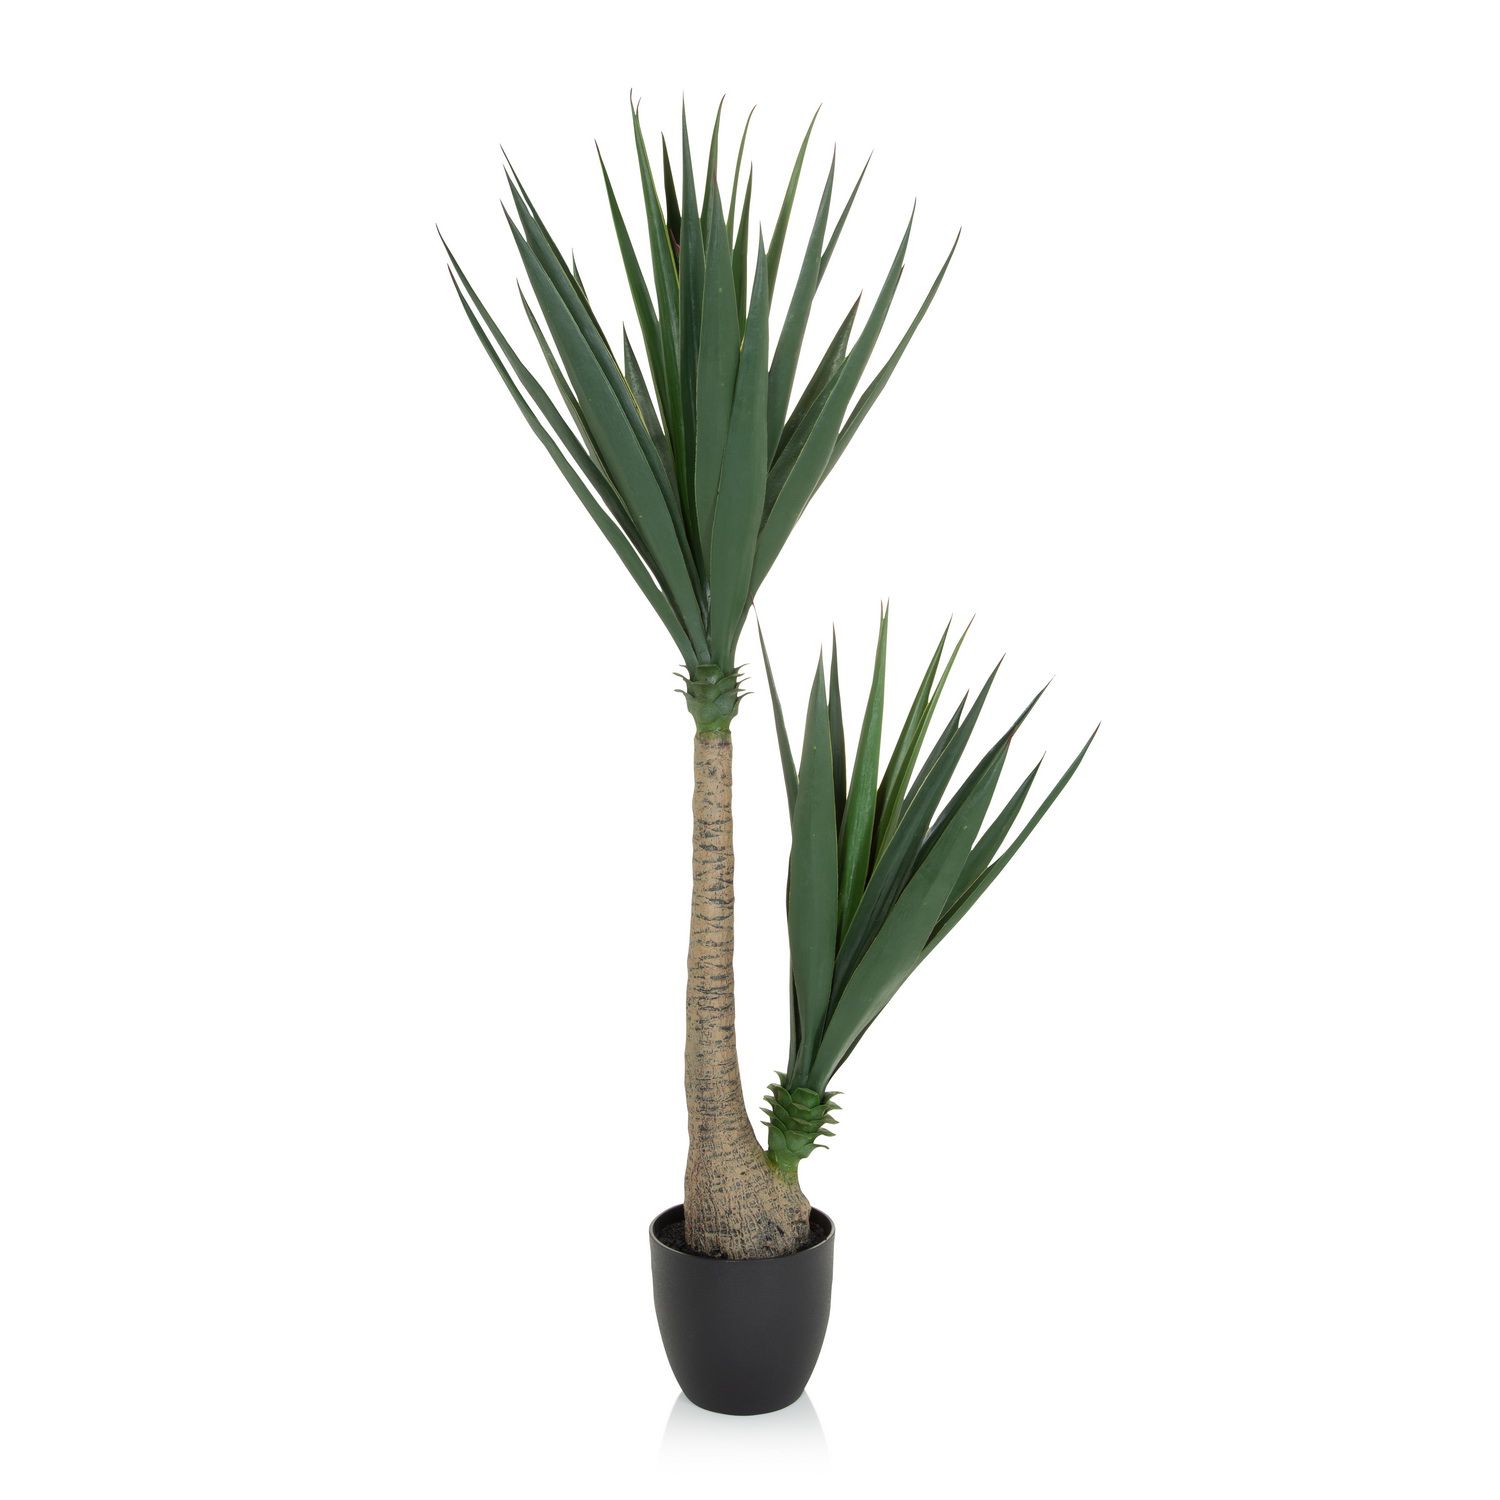 Kunstpflanze / Kunstbaum YUCCA Palmlilie grün hjh OFFICE